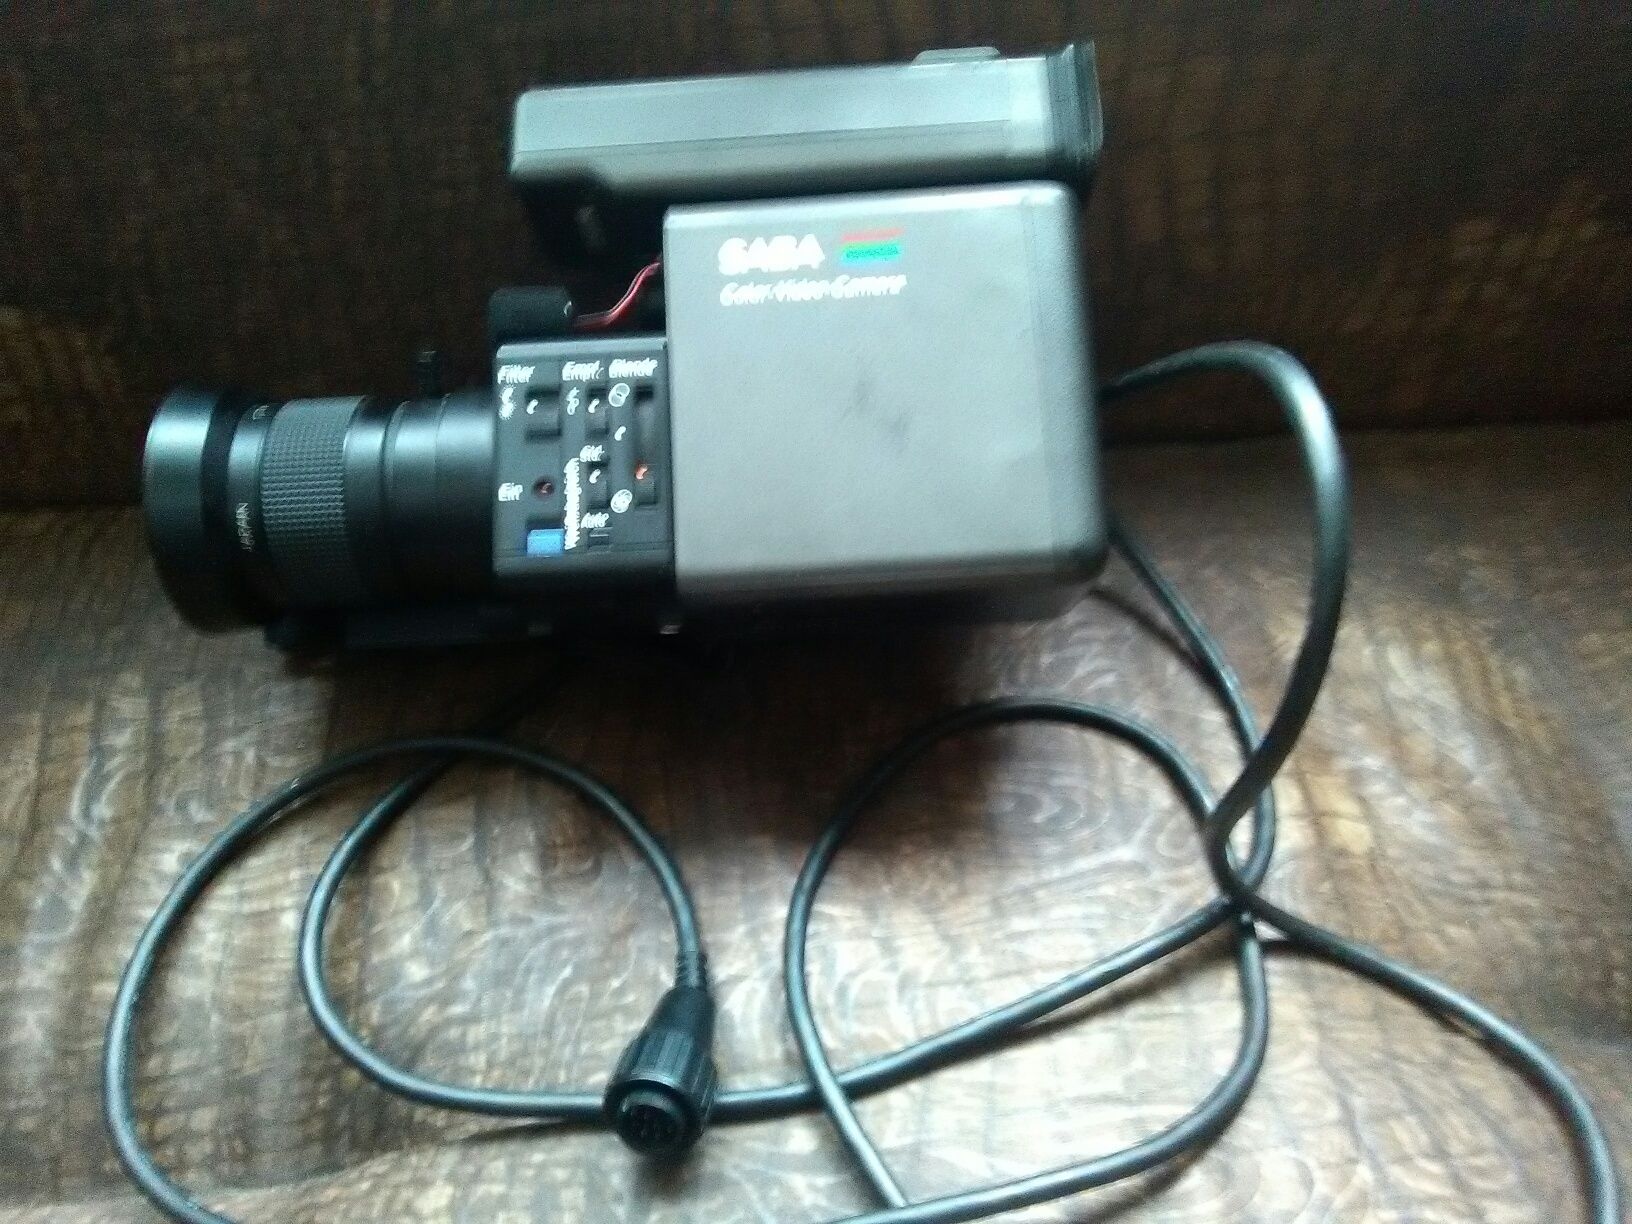 Saва cvc 73.видео камера